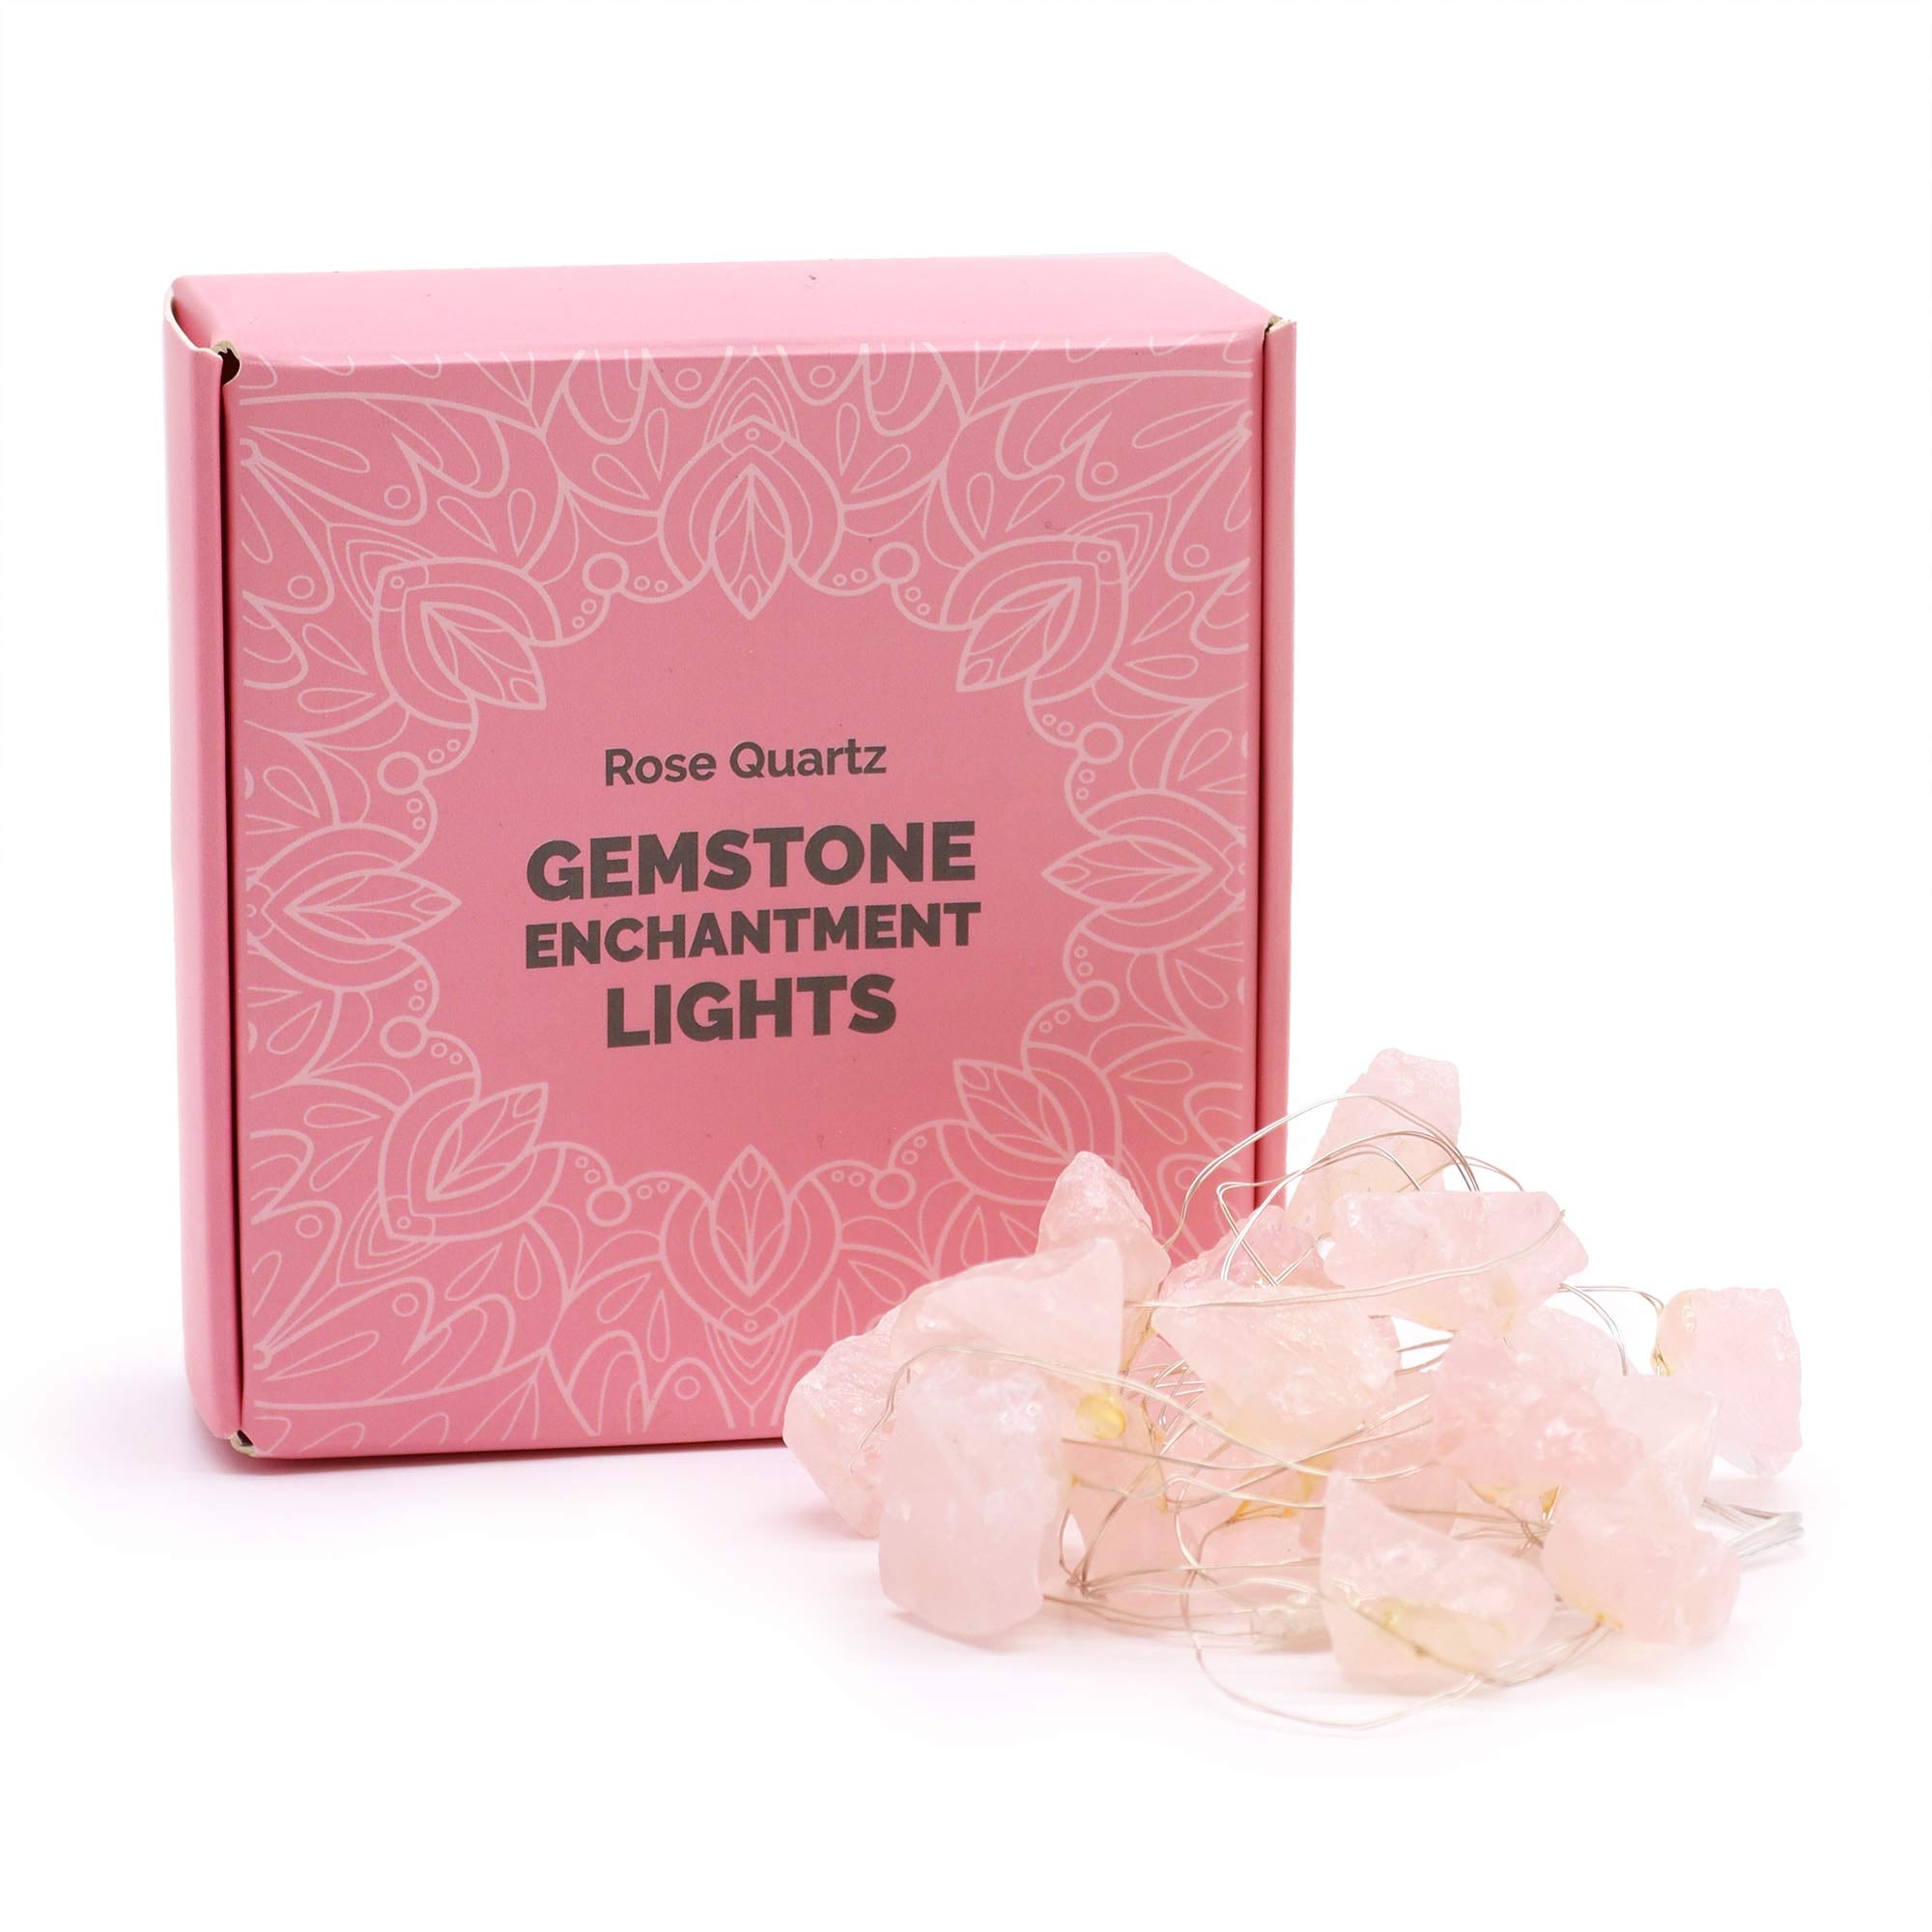 View Gemstone Enchantment Lights Rose Quartz information